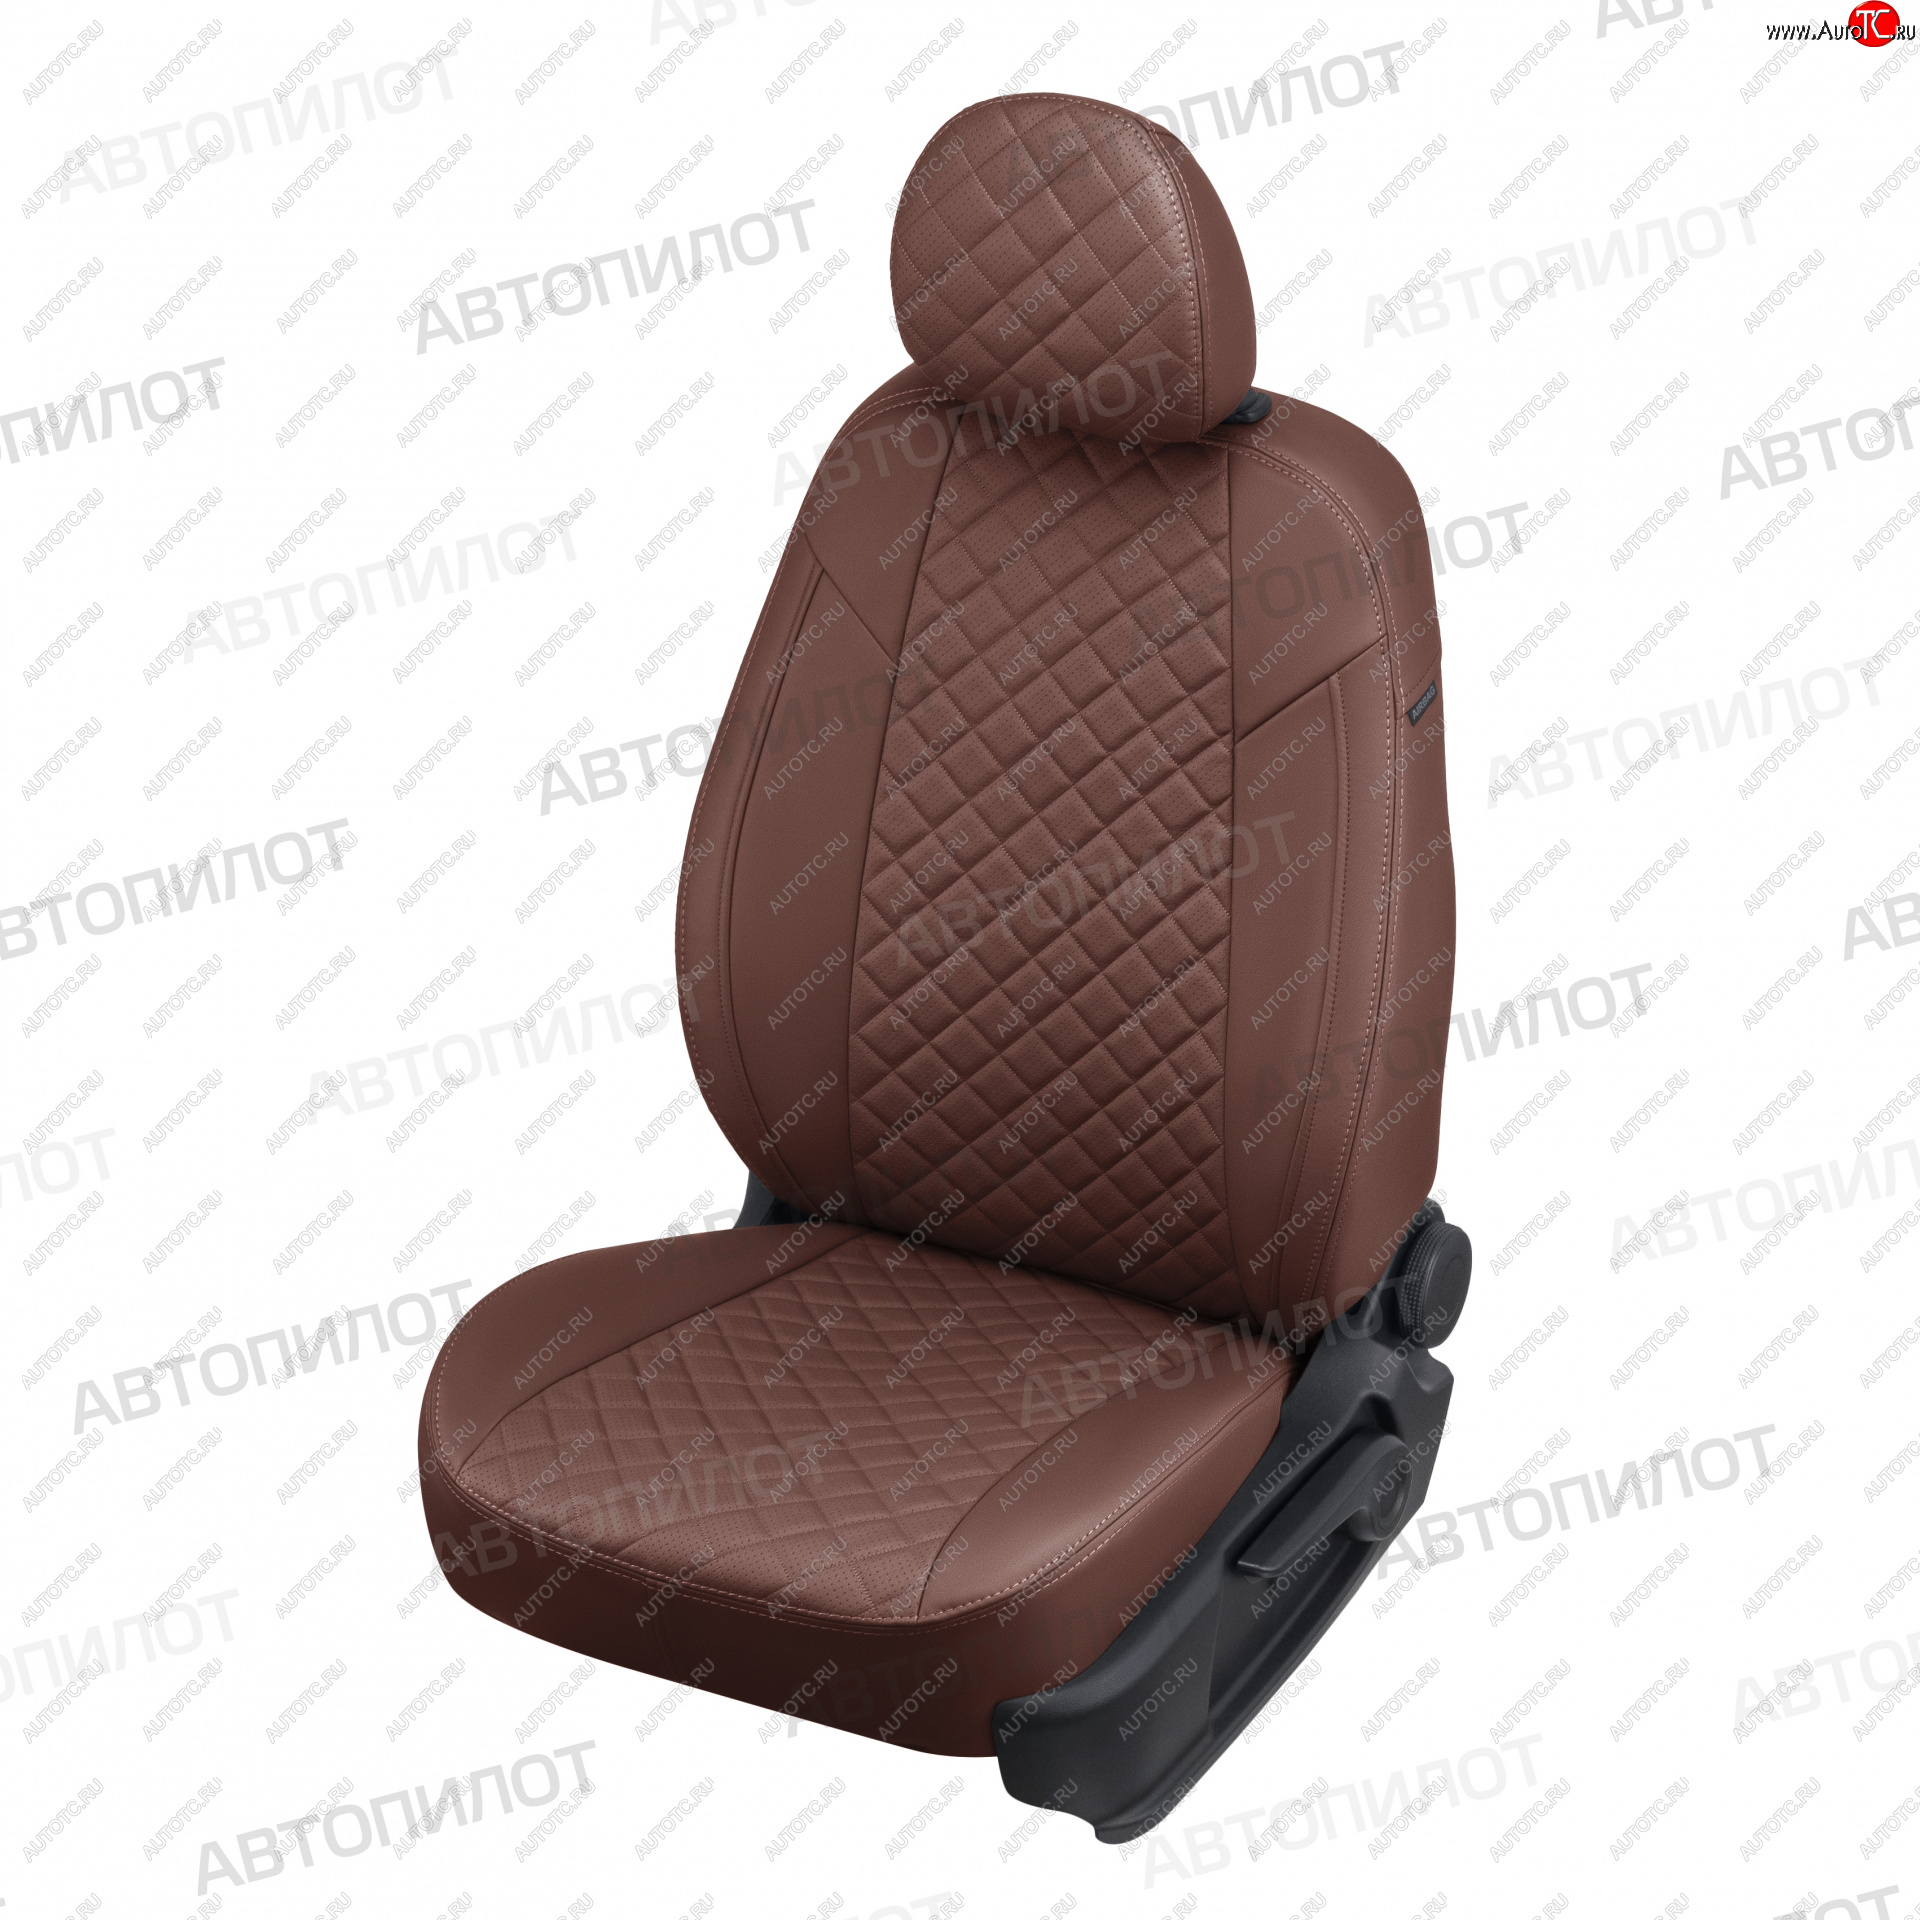 7 599 р. Чехлы сидений (экокожа) Автопилот Ромб  KIA Cerato  2 TD (2008-2013) (темно-коричневый)